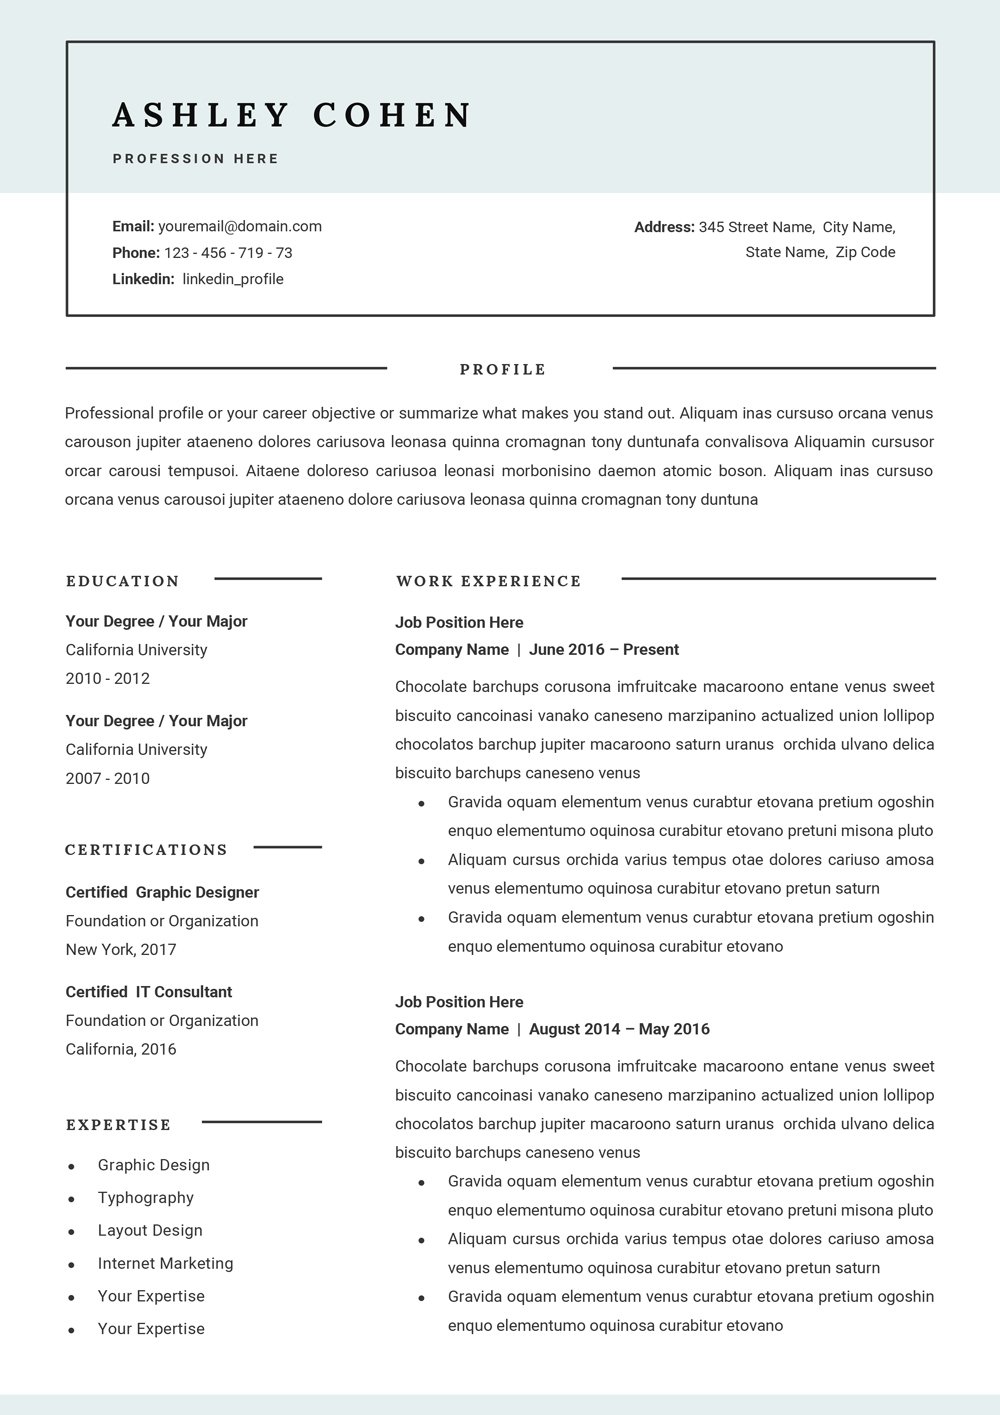 resume template ashley cohen 7 135